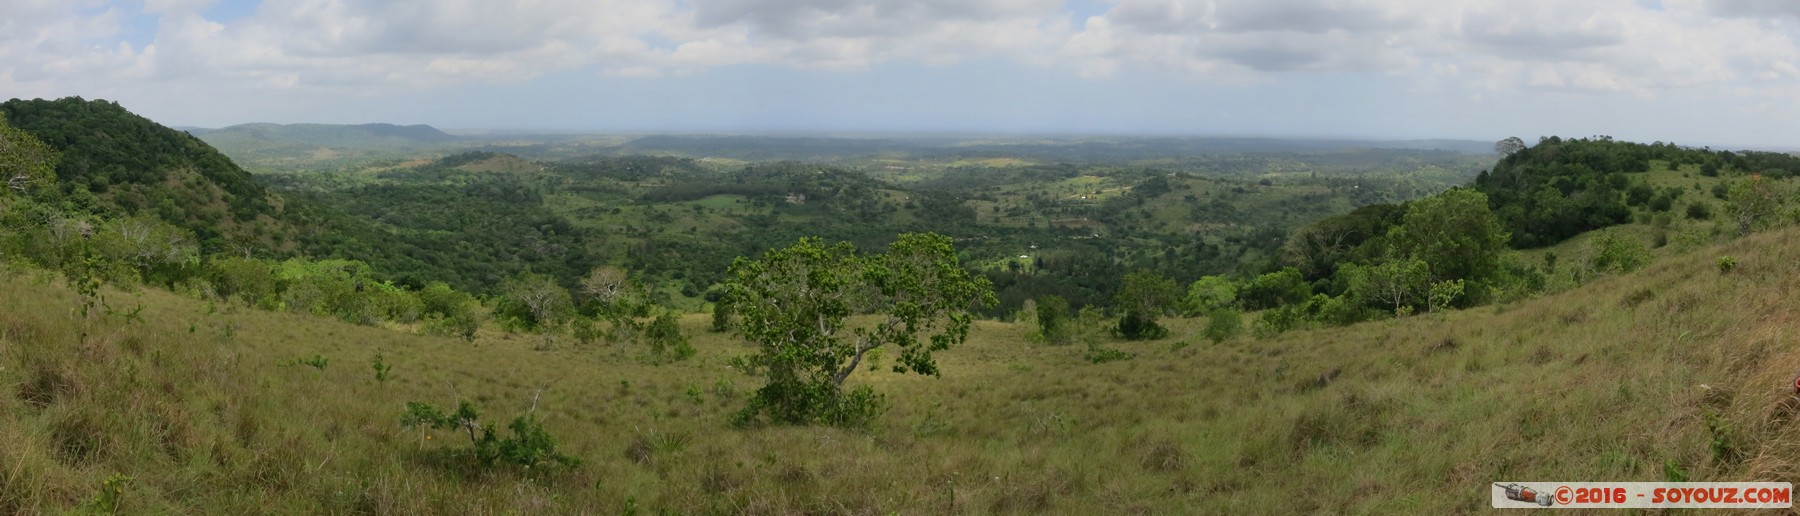 Shimba Hills National Reserve - Panorama
Stitched Panorama
Mots-clés: KEN Kenya Kwale Msurwa Shimba Hills National Reserve panorama